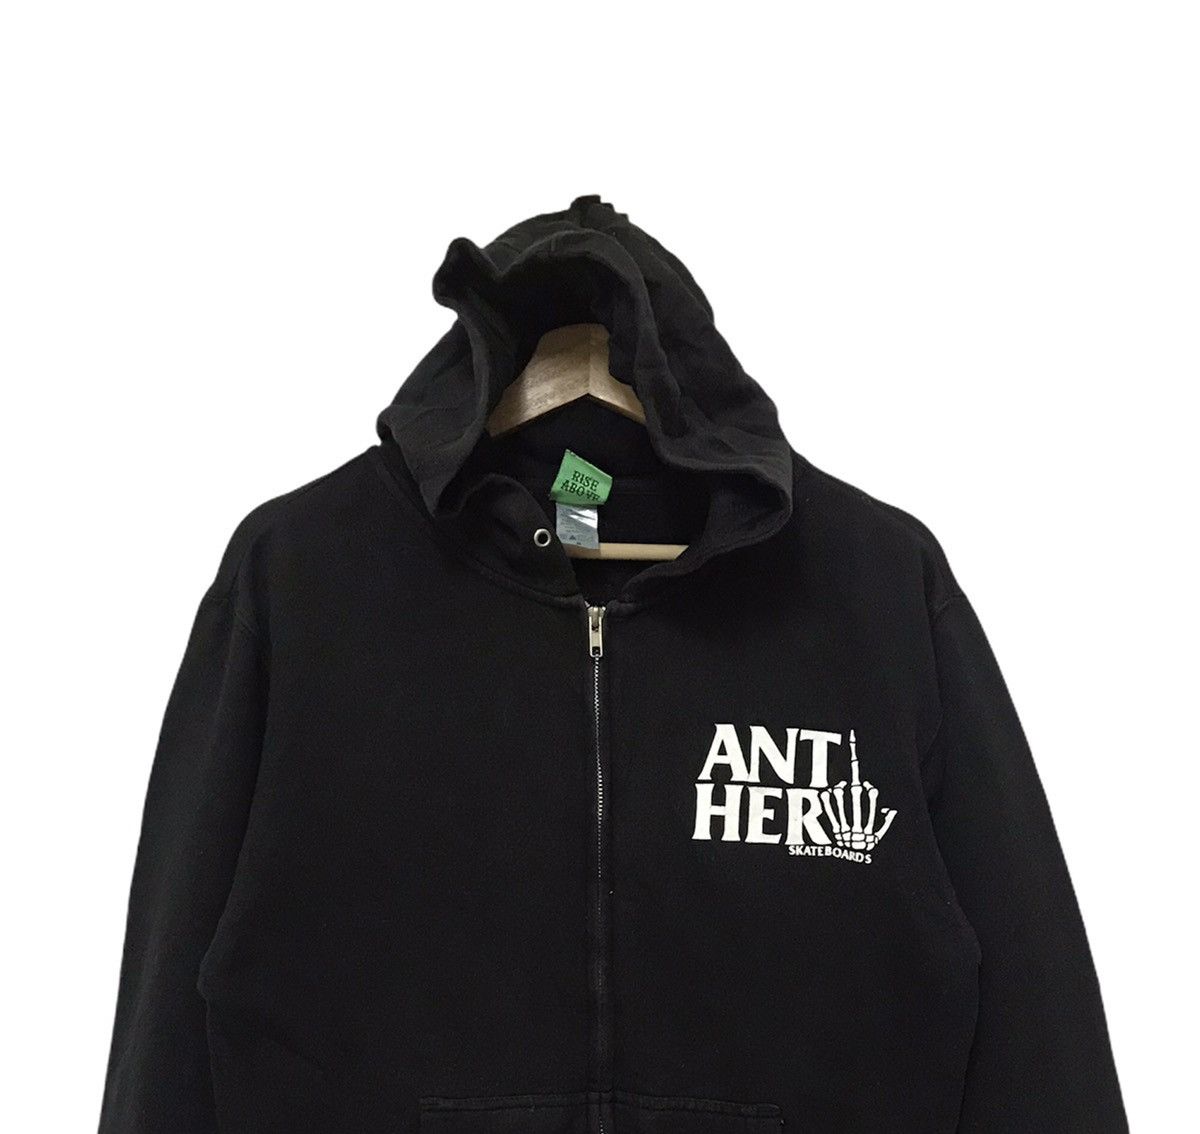 Antihero Anti Hero Hoodie Skateboard Sweatshirt Size US S / EU 44-46 / 1 - 2 Preview